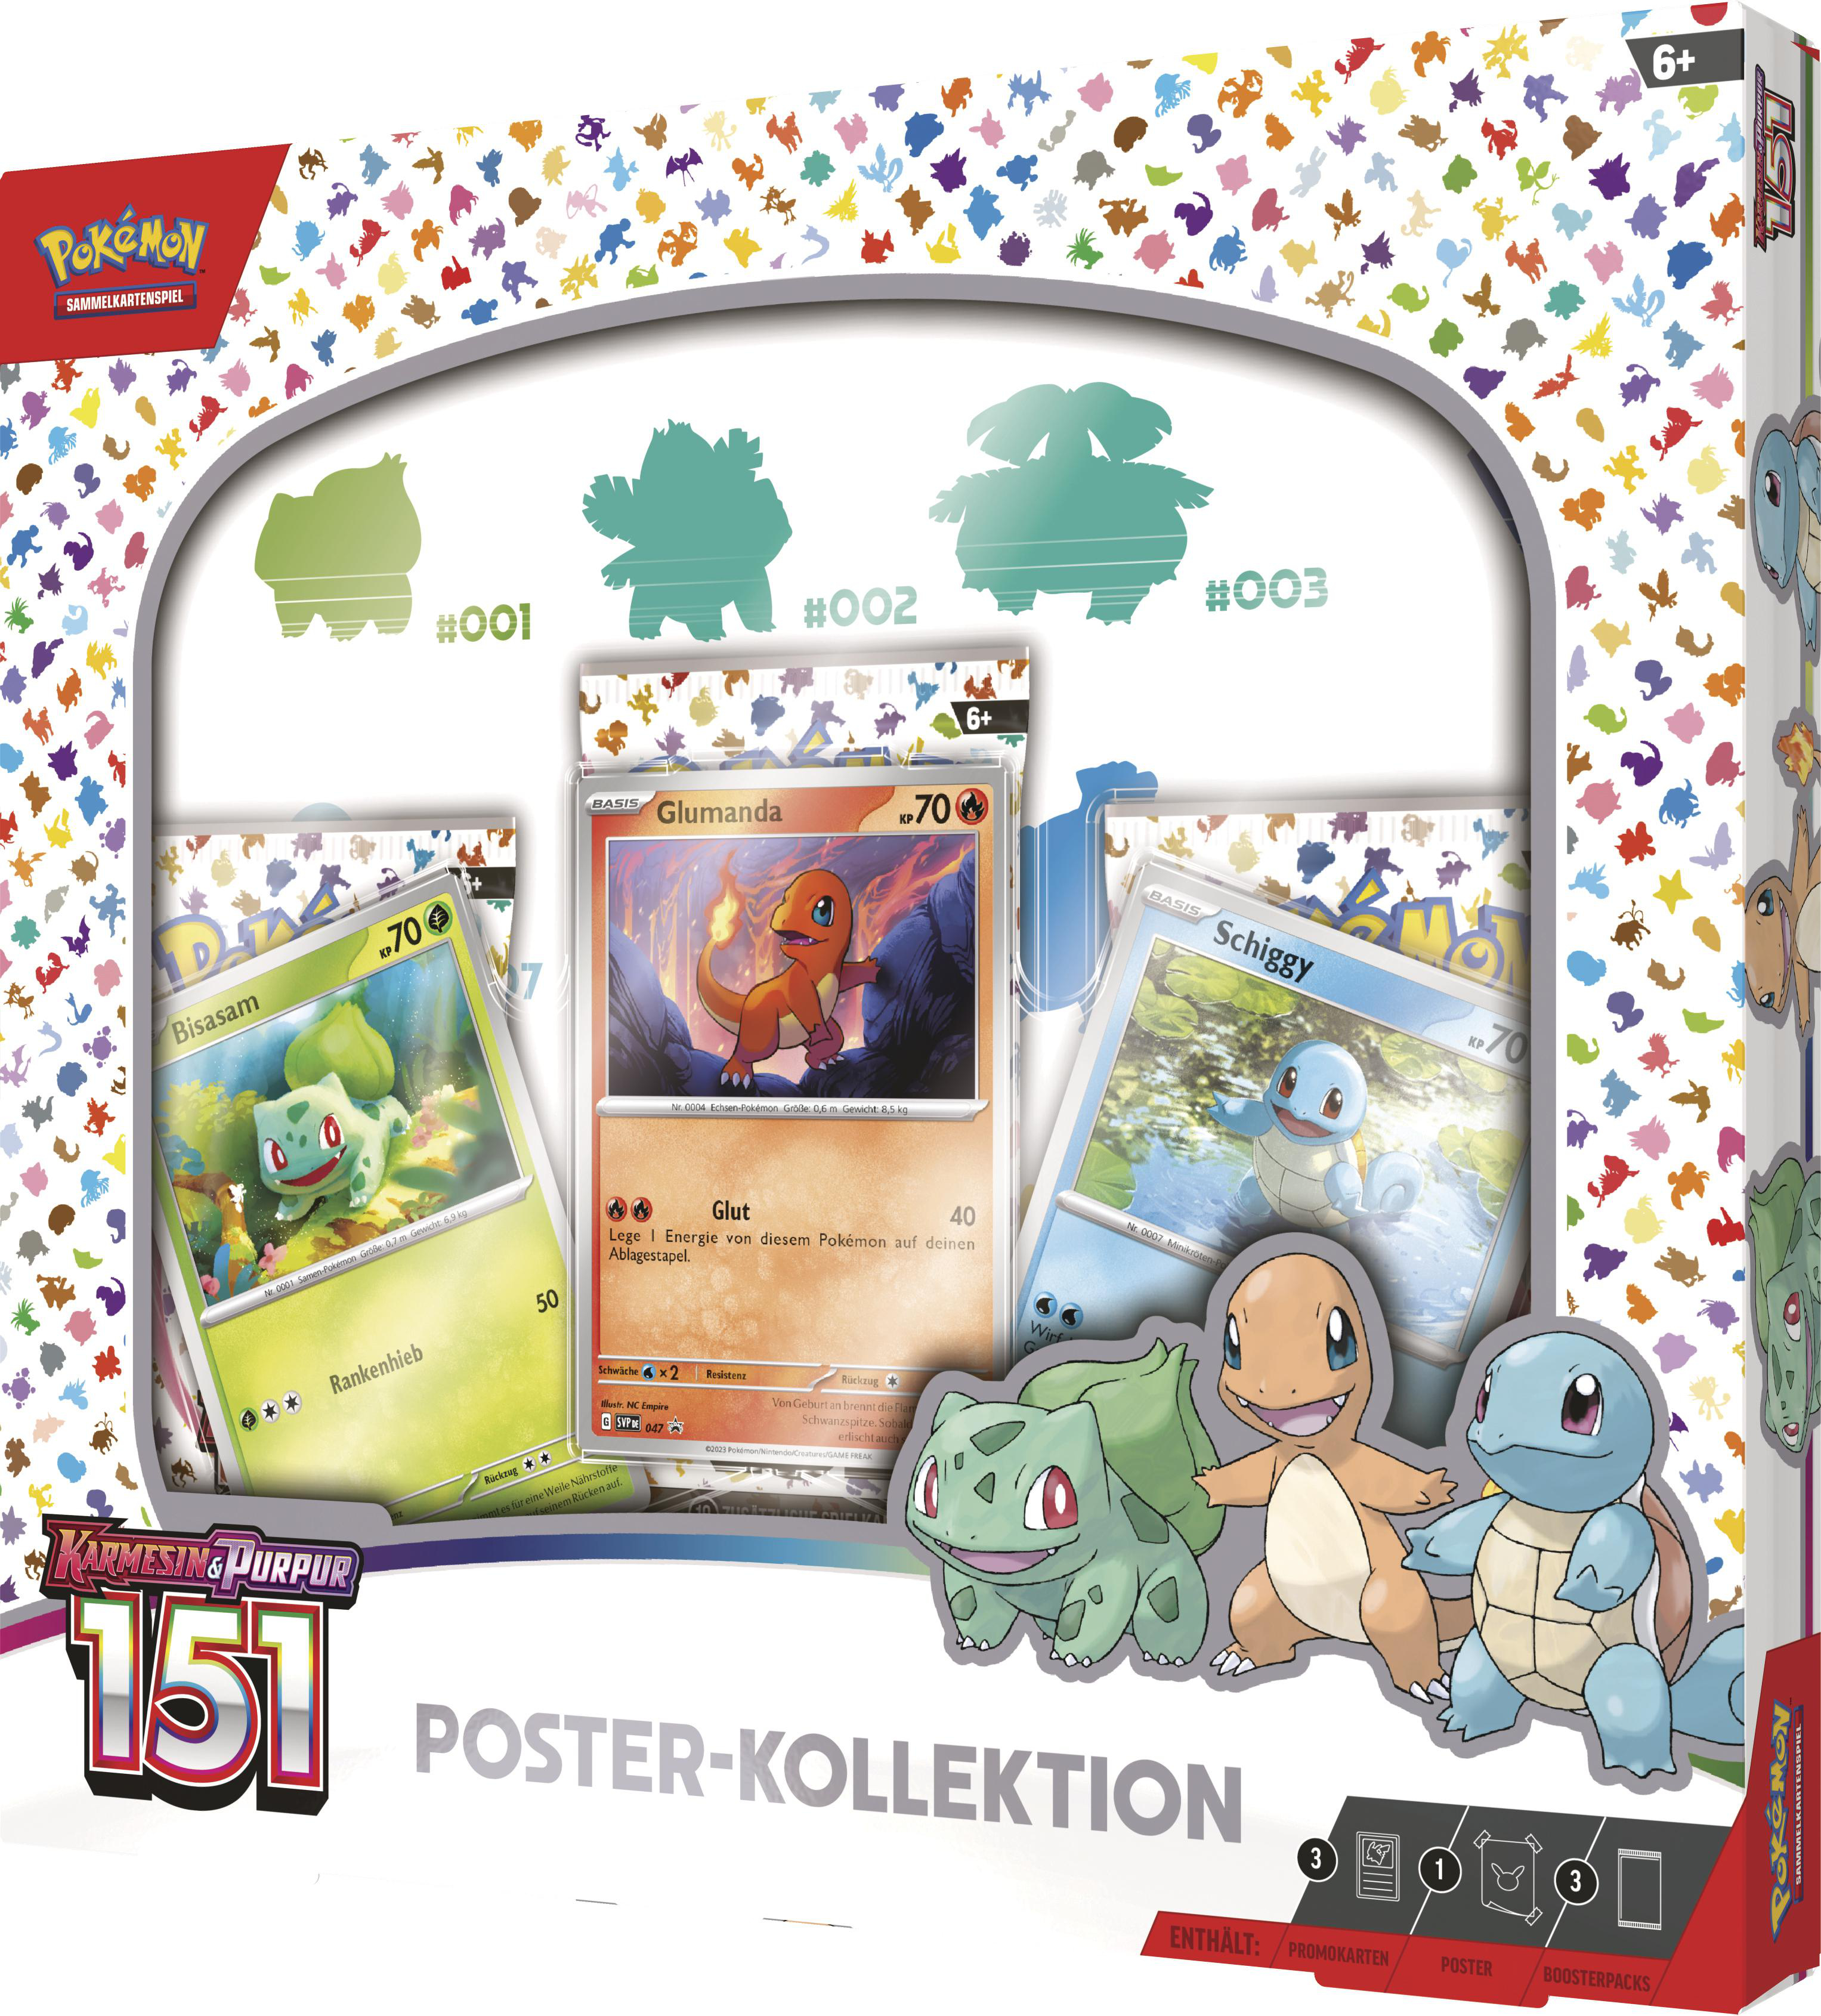 KP03.5 Pokémon COMPANY Sammelkarten Box- Poster POKEMON 151 45557 INT. THE